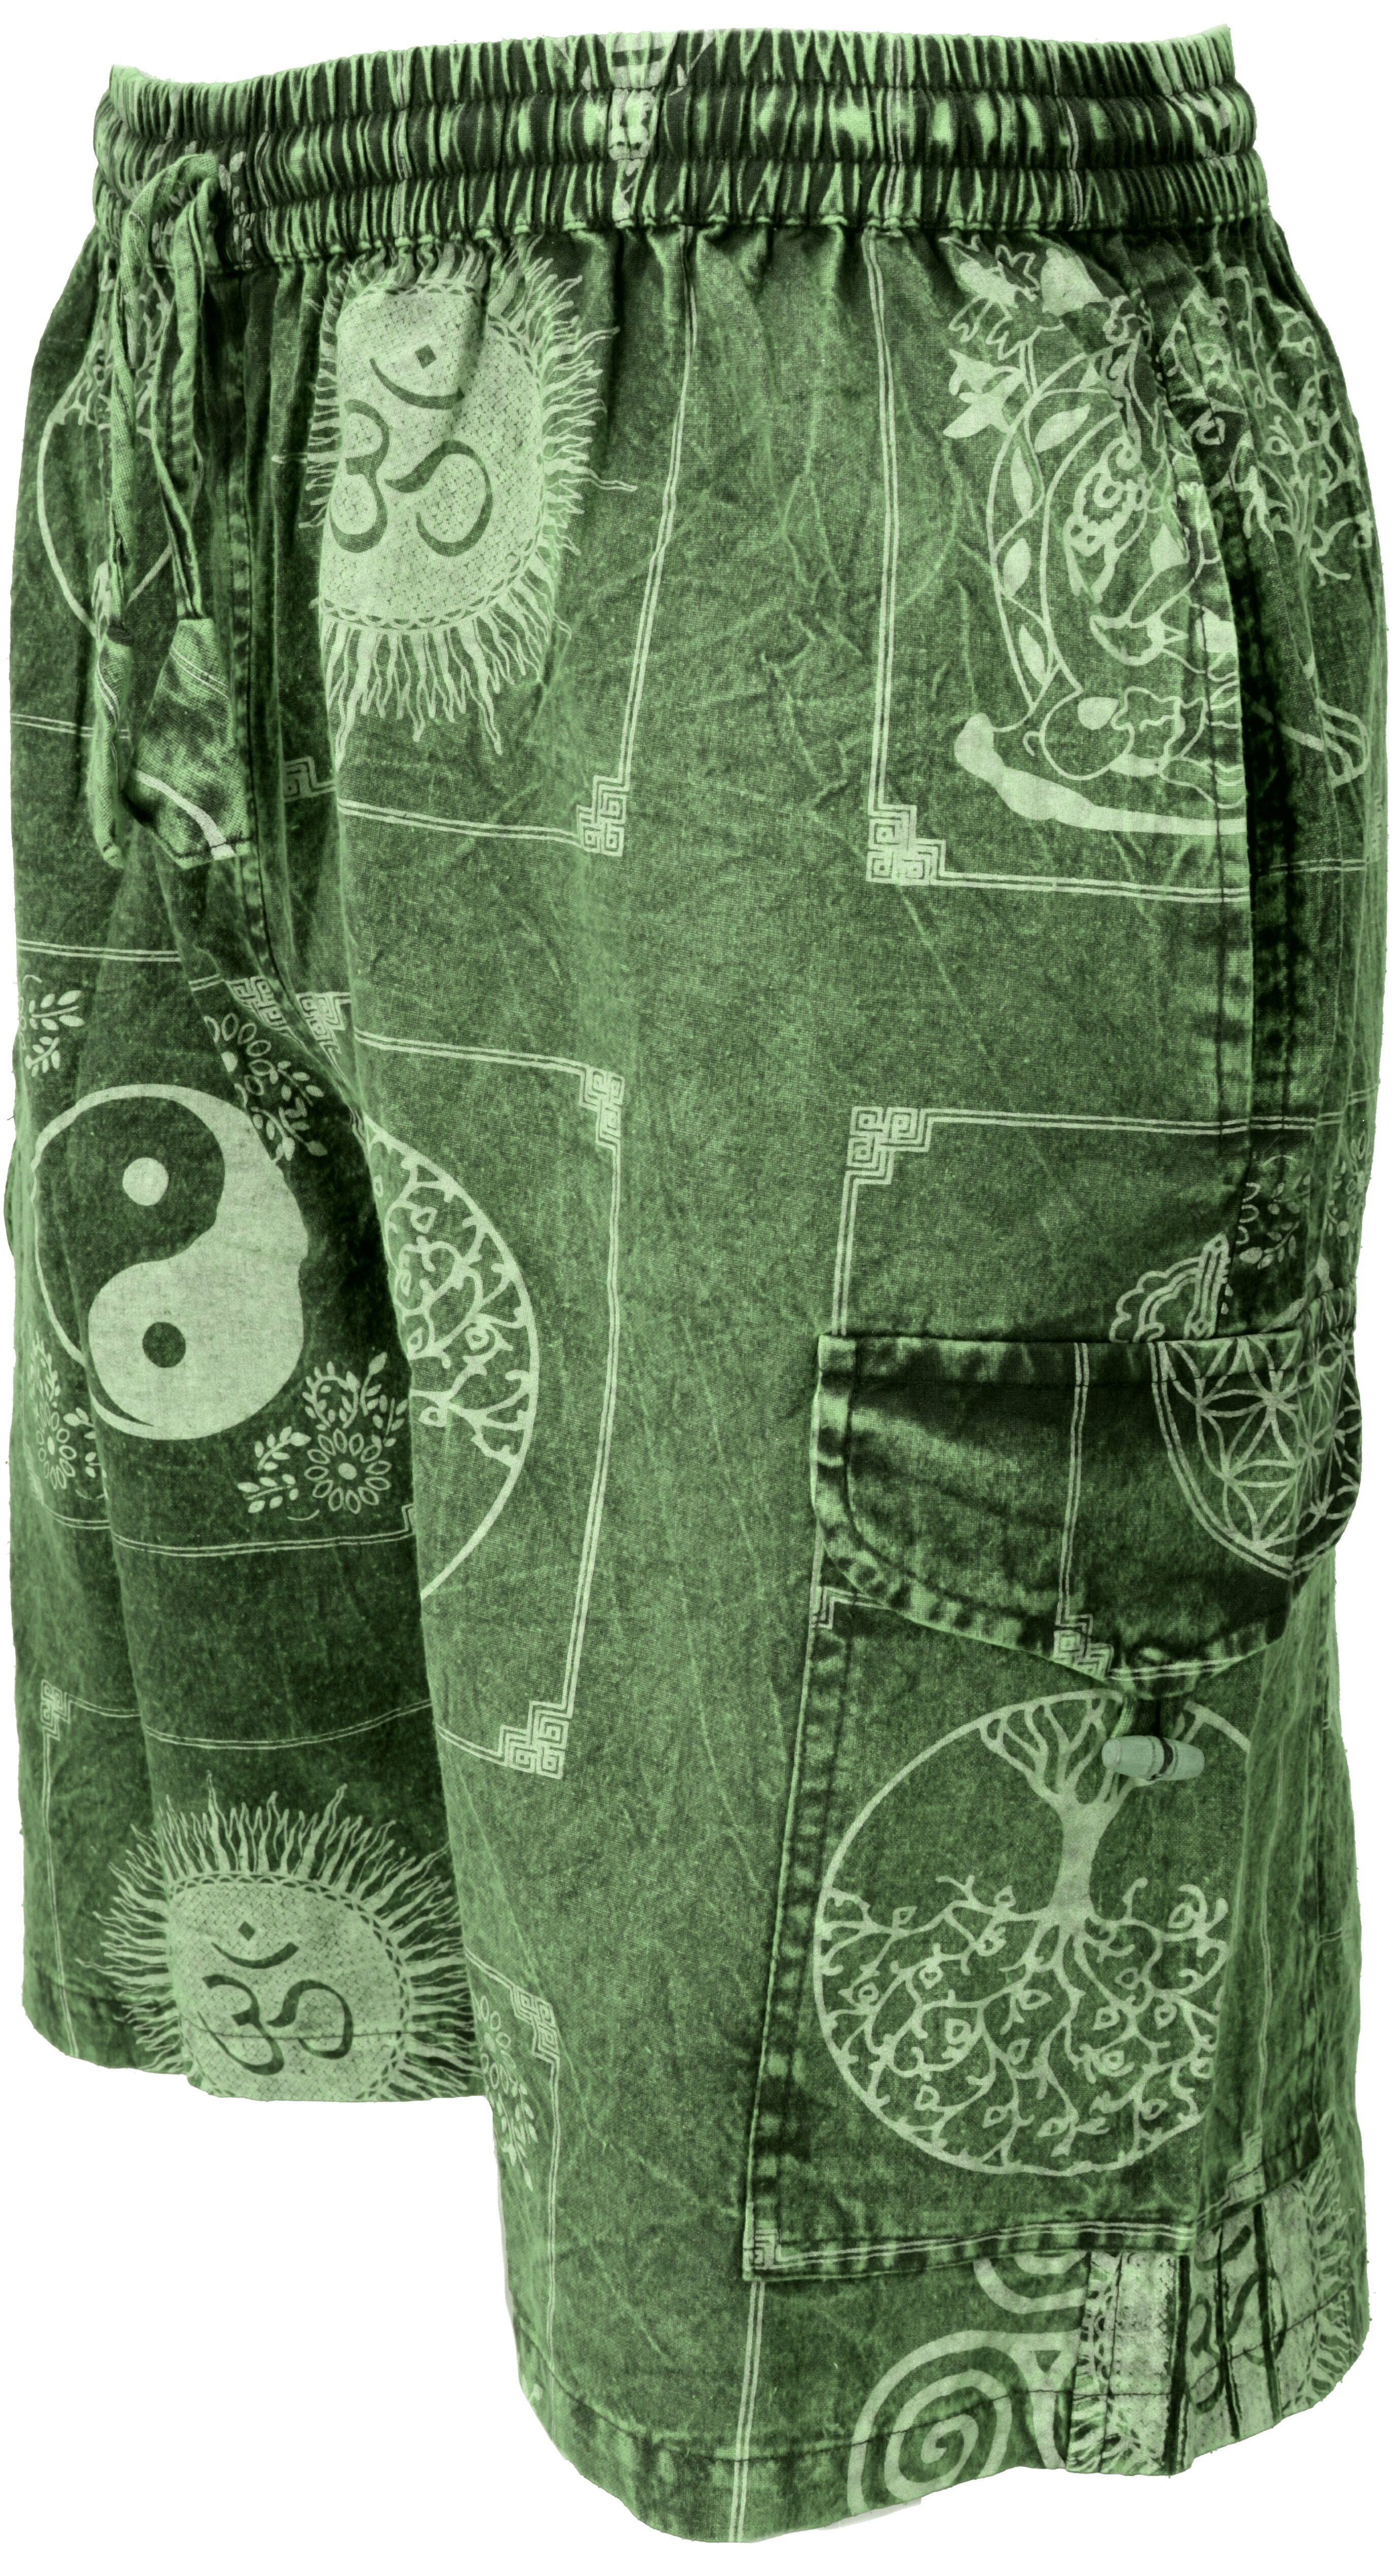 grün Style, alternative Ethno Nepal Bekleidung aus -.. Guru-Shop Yogashorts, Relaxhose Shorts Ethno Hippie, stonewash